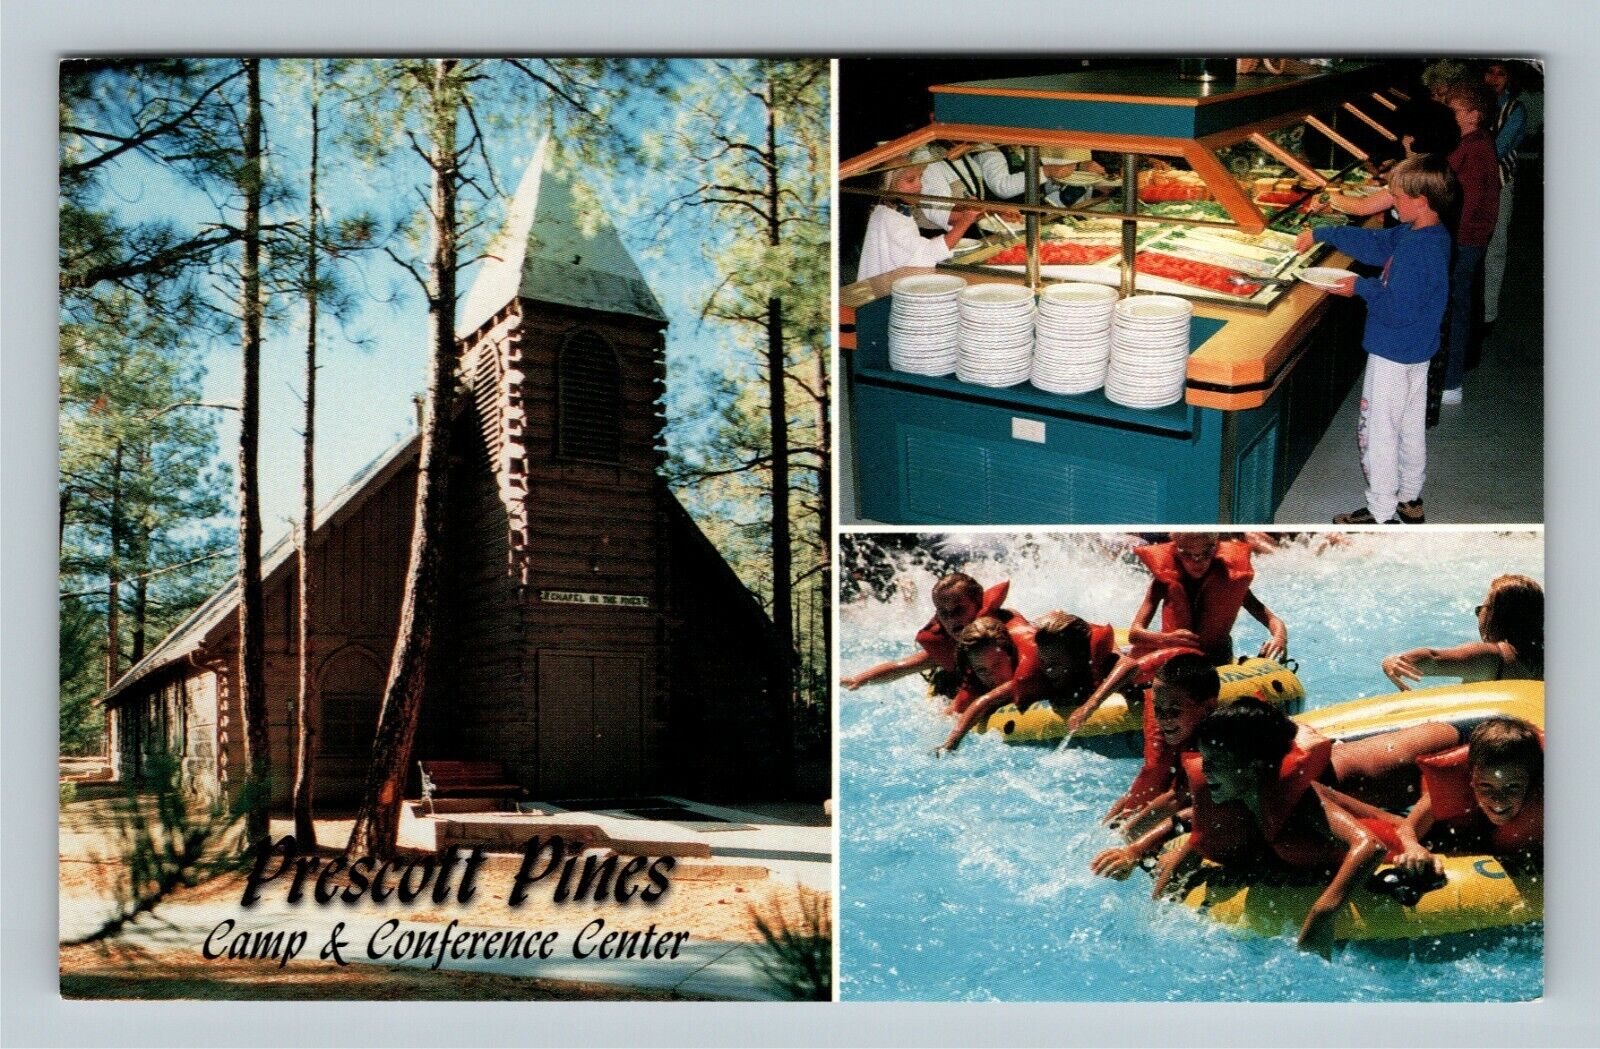 Prescott AZ, Prescott Pines Camp & Conference Center, Arizona Vintage Postcard